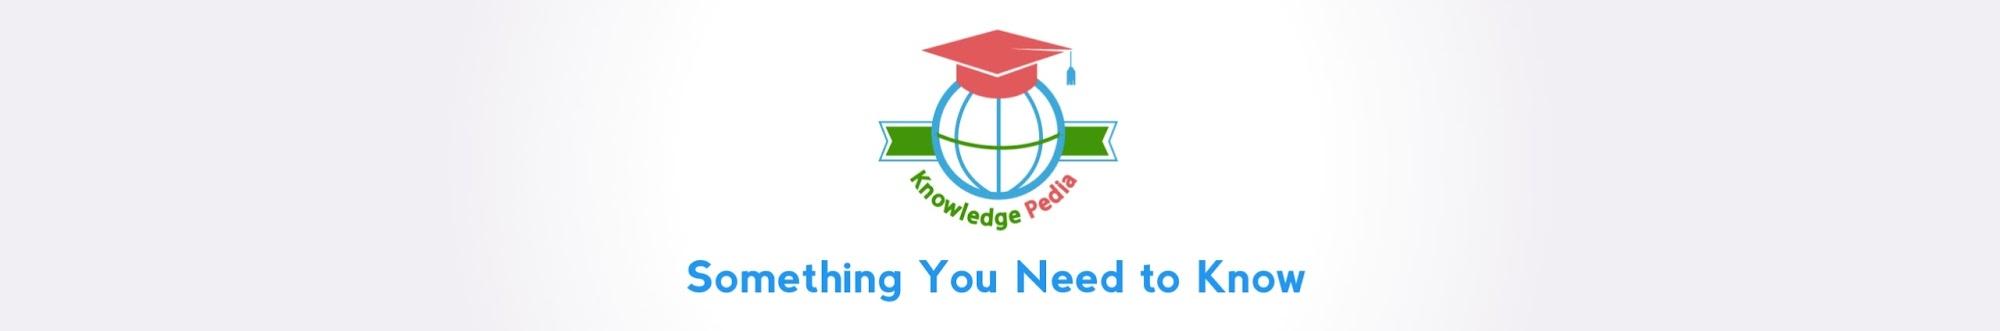 Knowledge Pedia